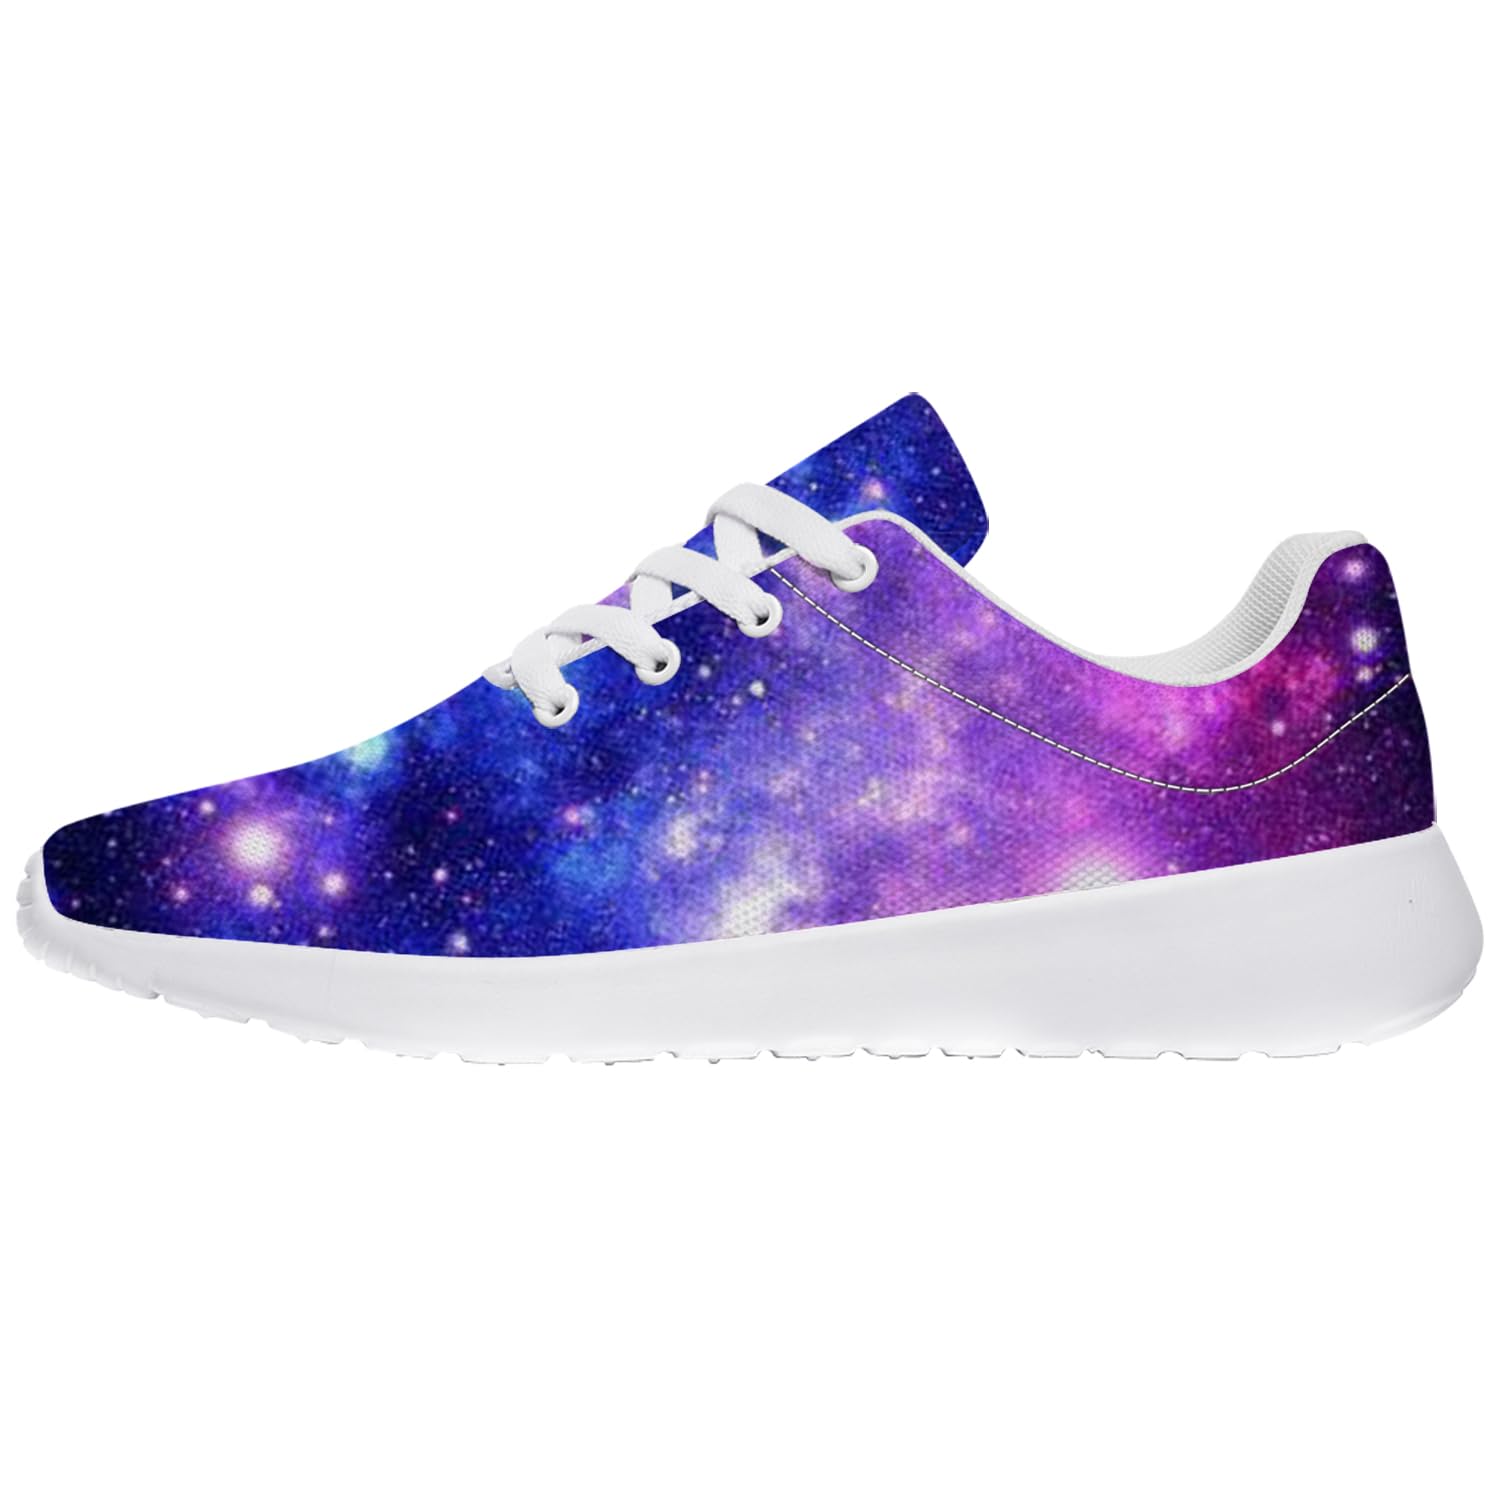 lodaden Blue Purple Galaxy Shoes for Women Men, 3D Print Universe Galaxy Nebula Sneakers Tennis Walking Shoes Gifts for Friends,US Size 10.5